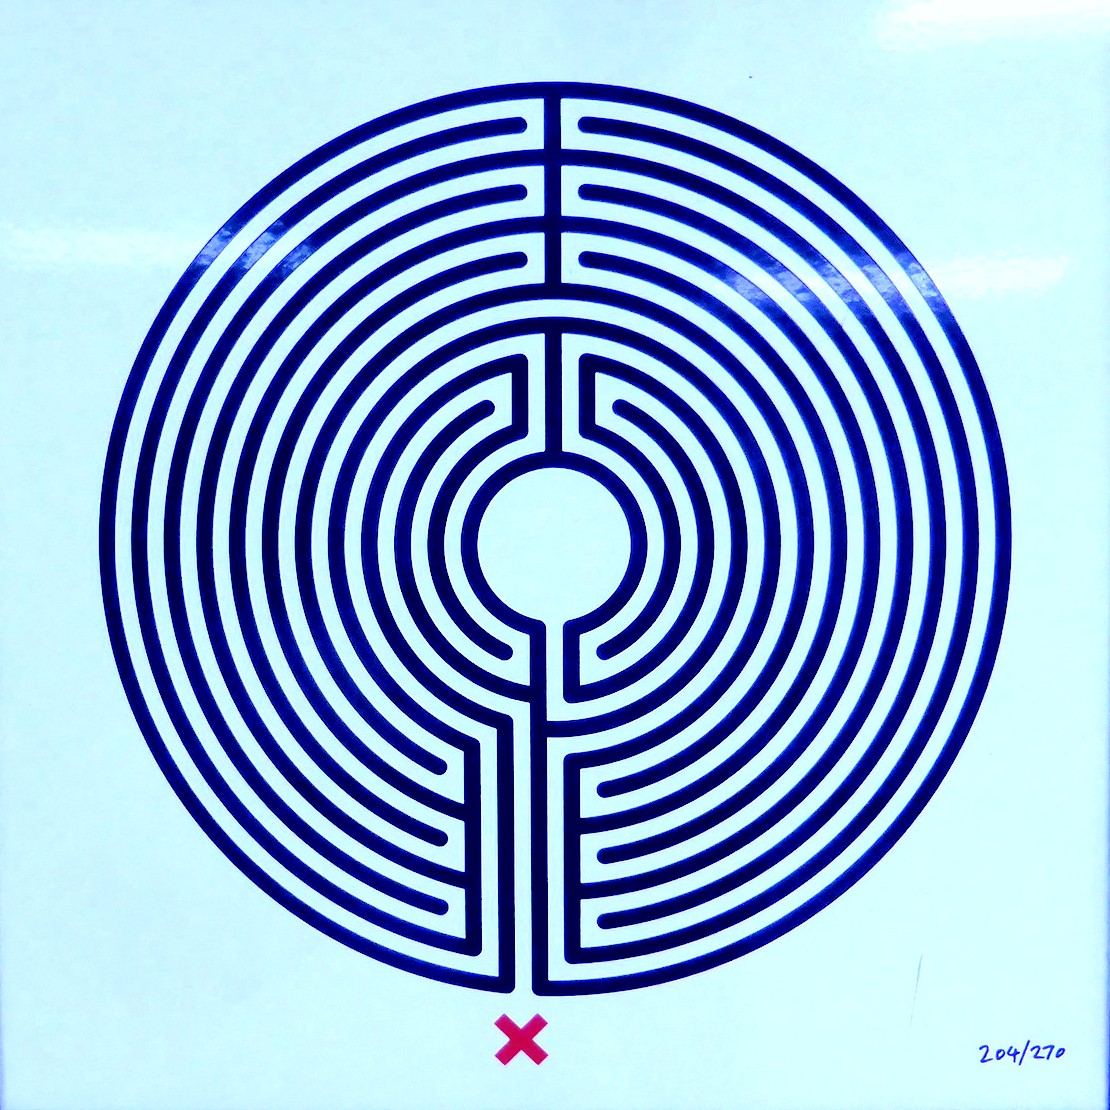 Maze on the London underground